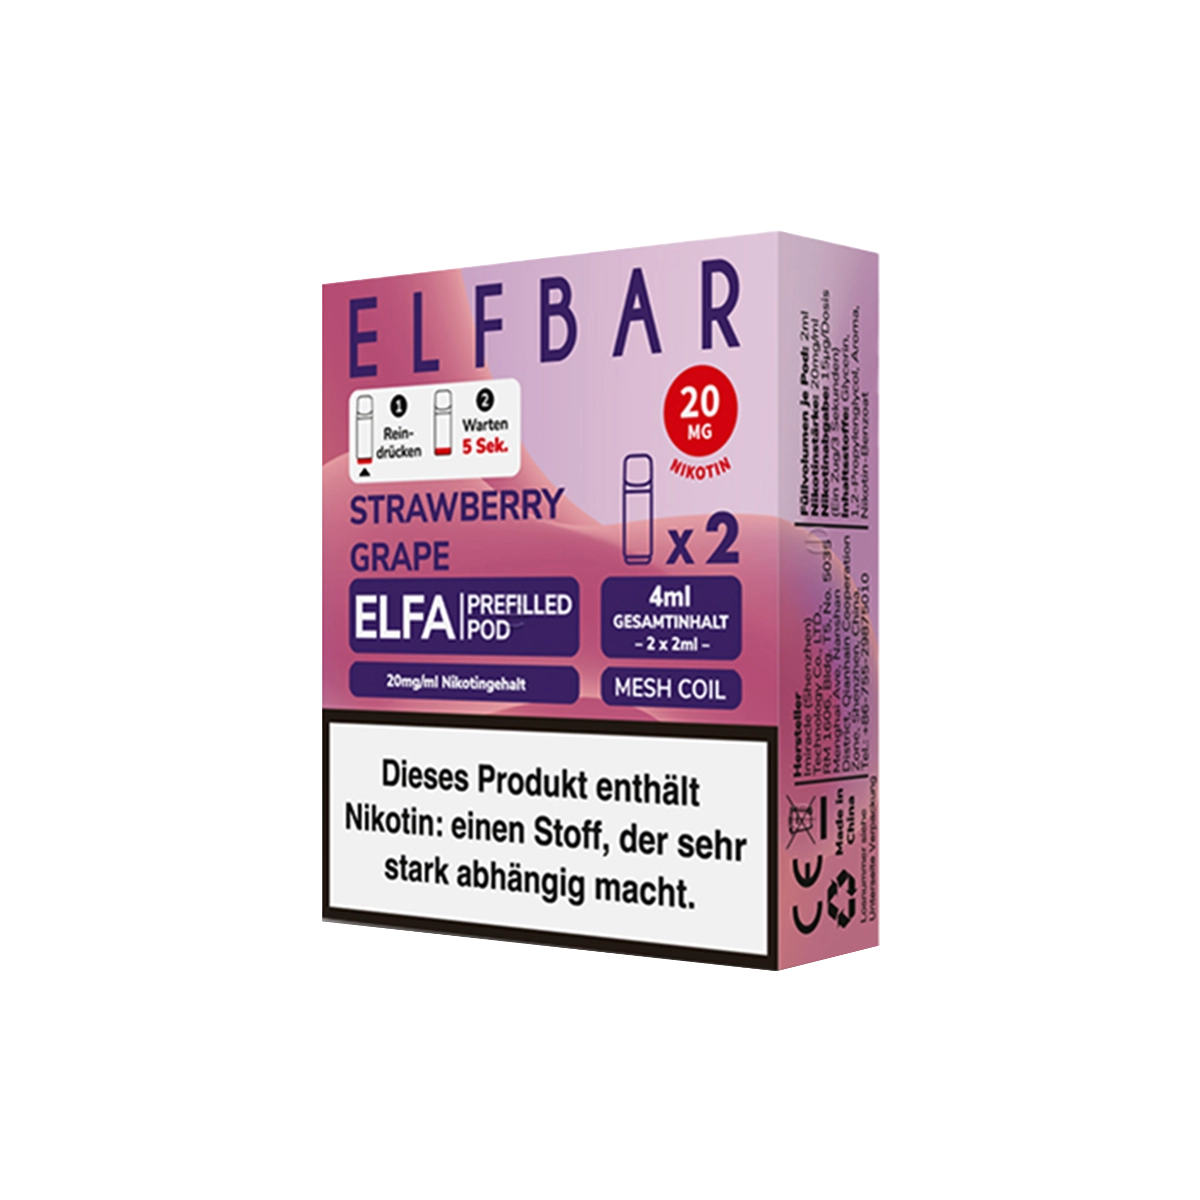 ELFBAR ELFA CP PODS - STRAWBERRY GRAPE 20MG NIKOTIN 2ER PACK (10 STÜCK)